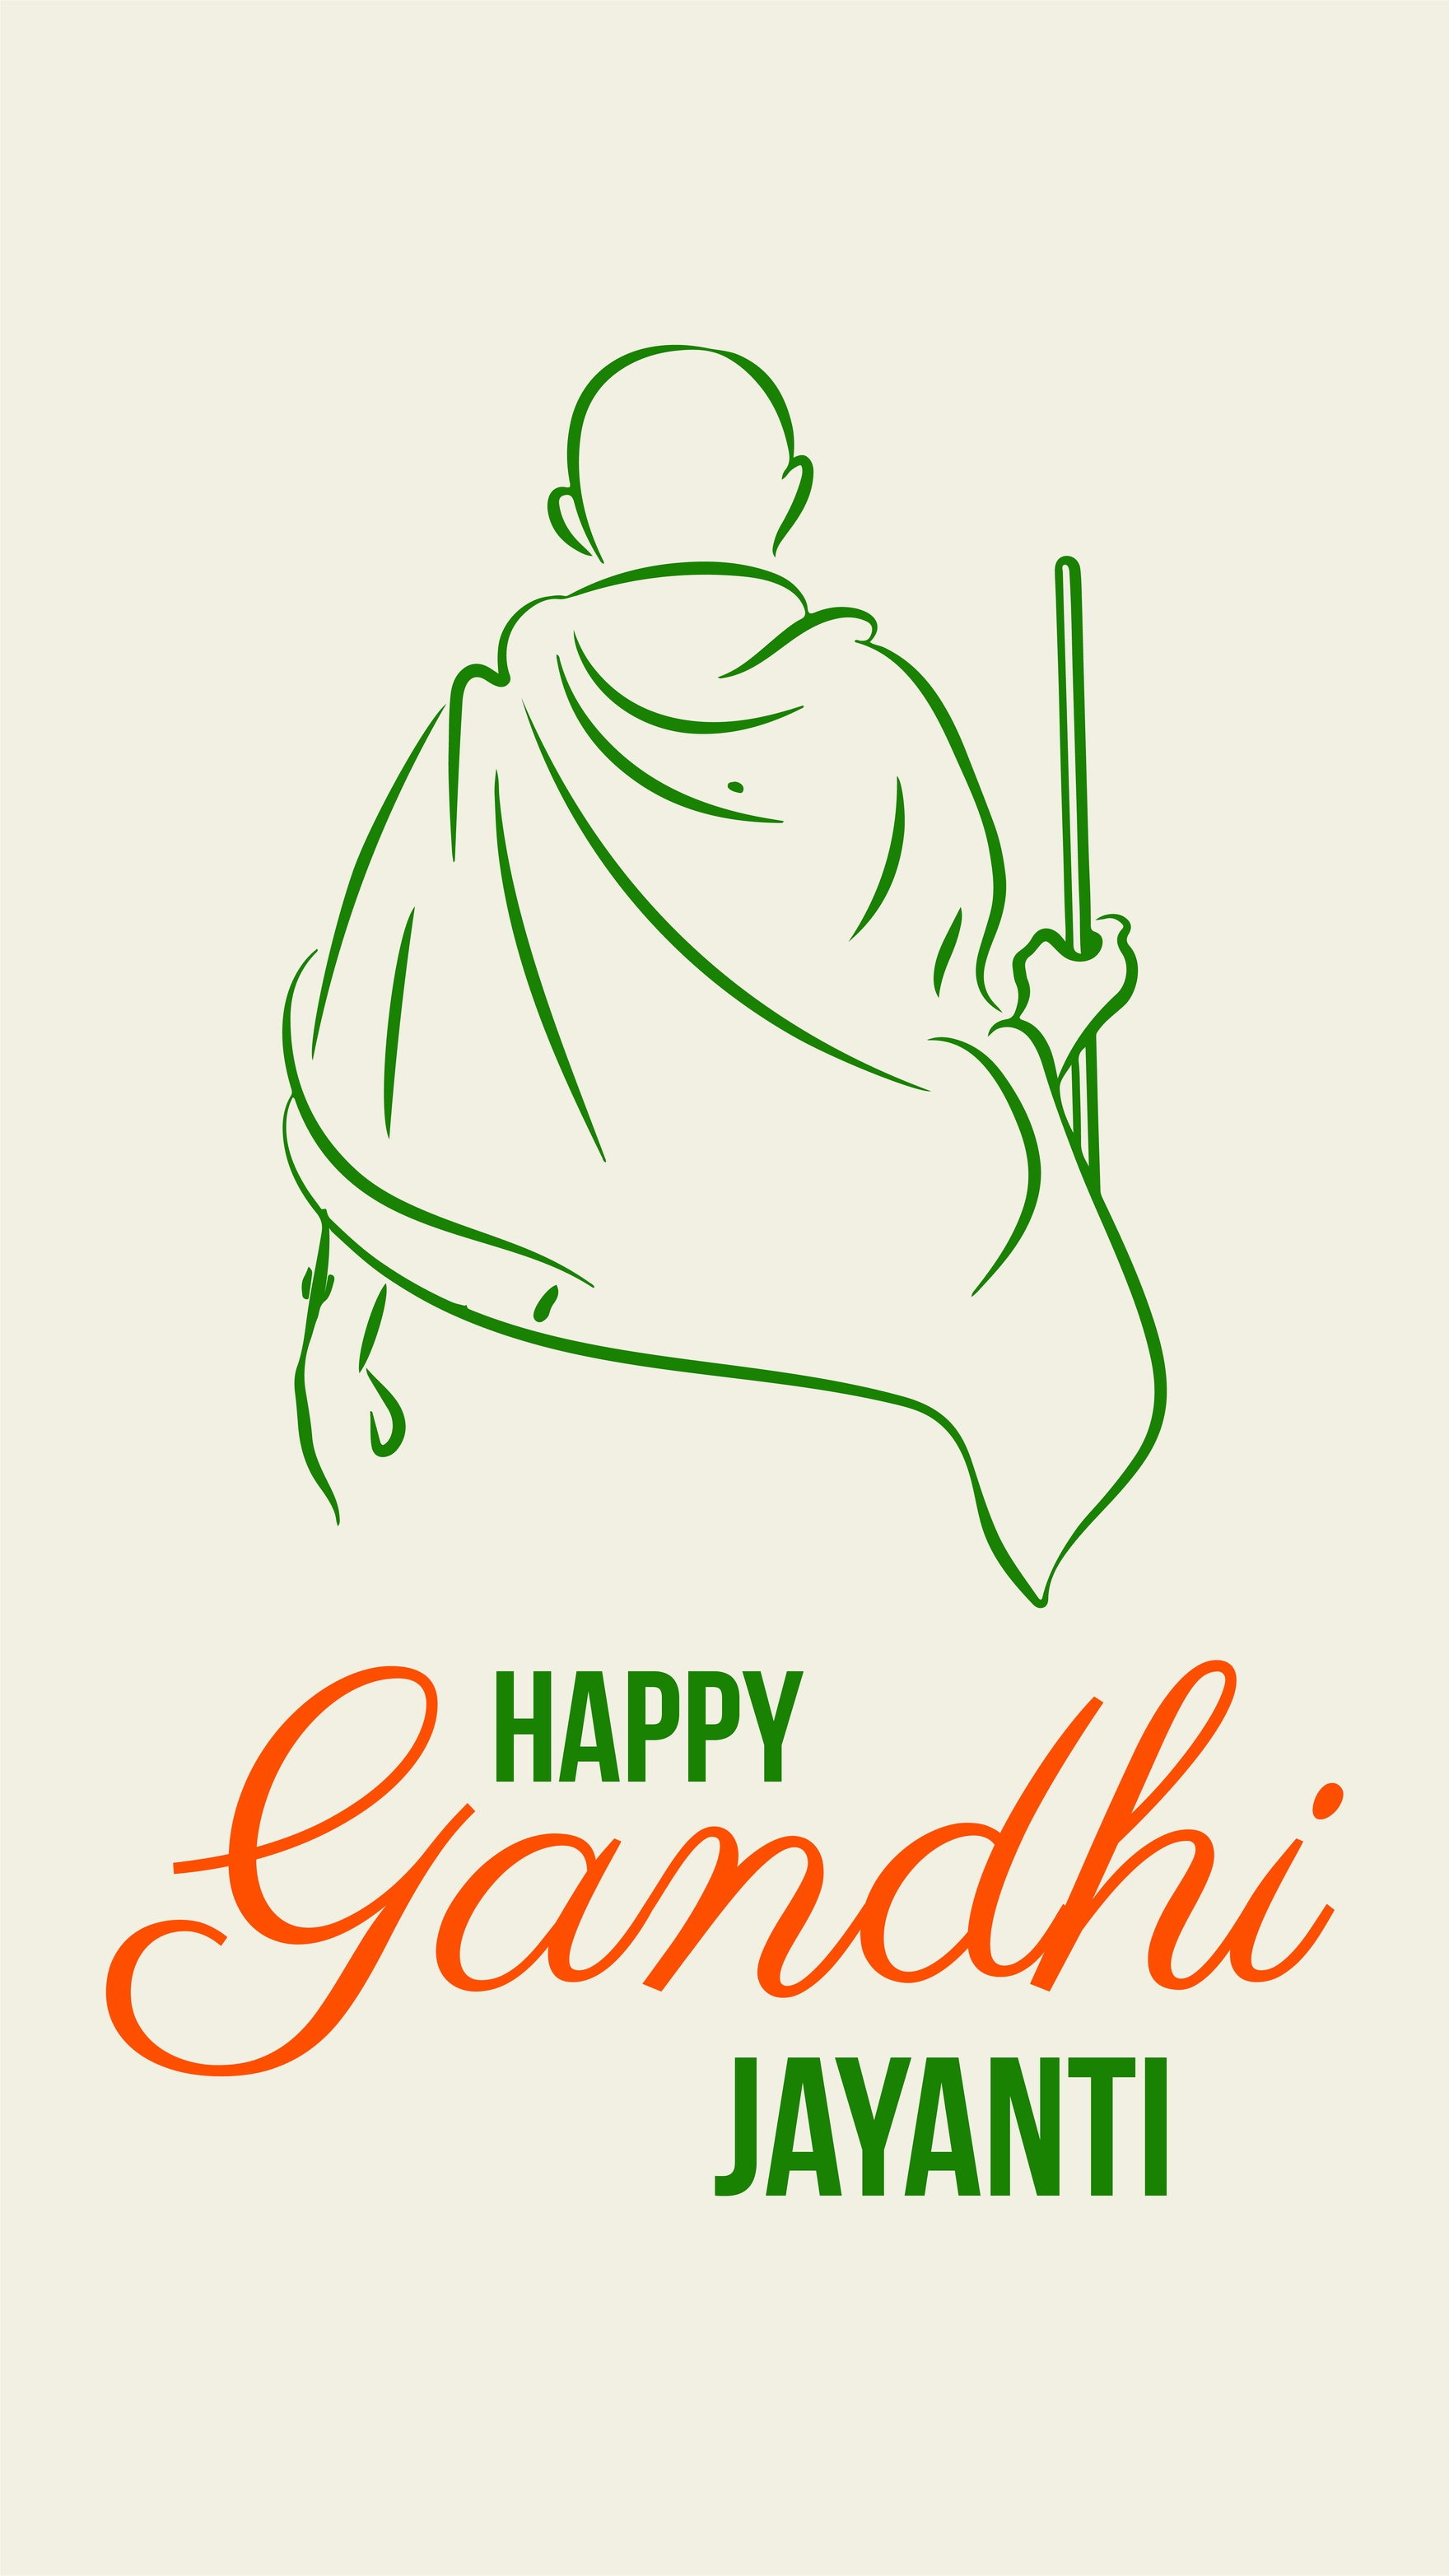 Free Gandhi Jayanti iPhone Background in PDF, Illustrator, PSD, EPS, SVG, JPG, PNG